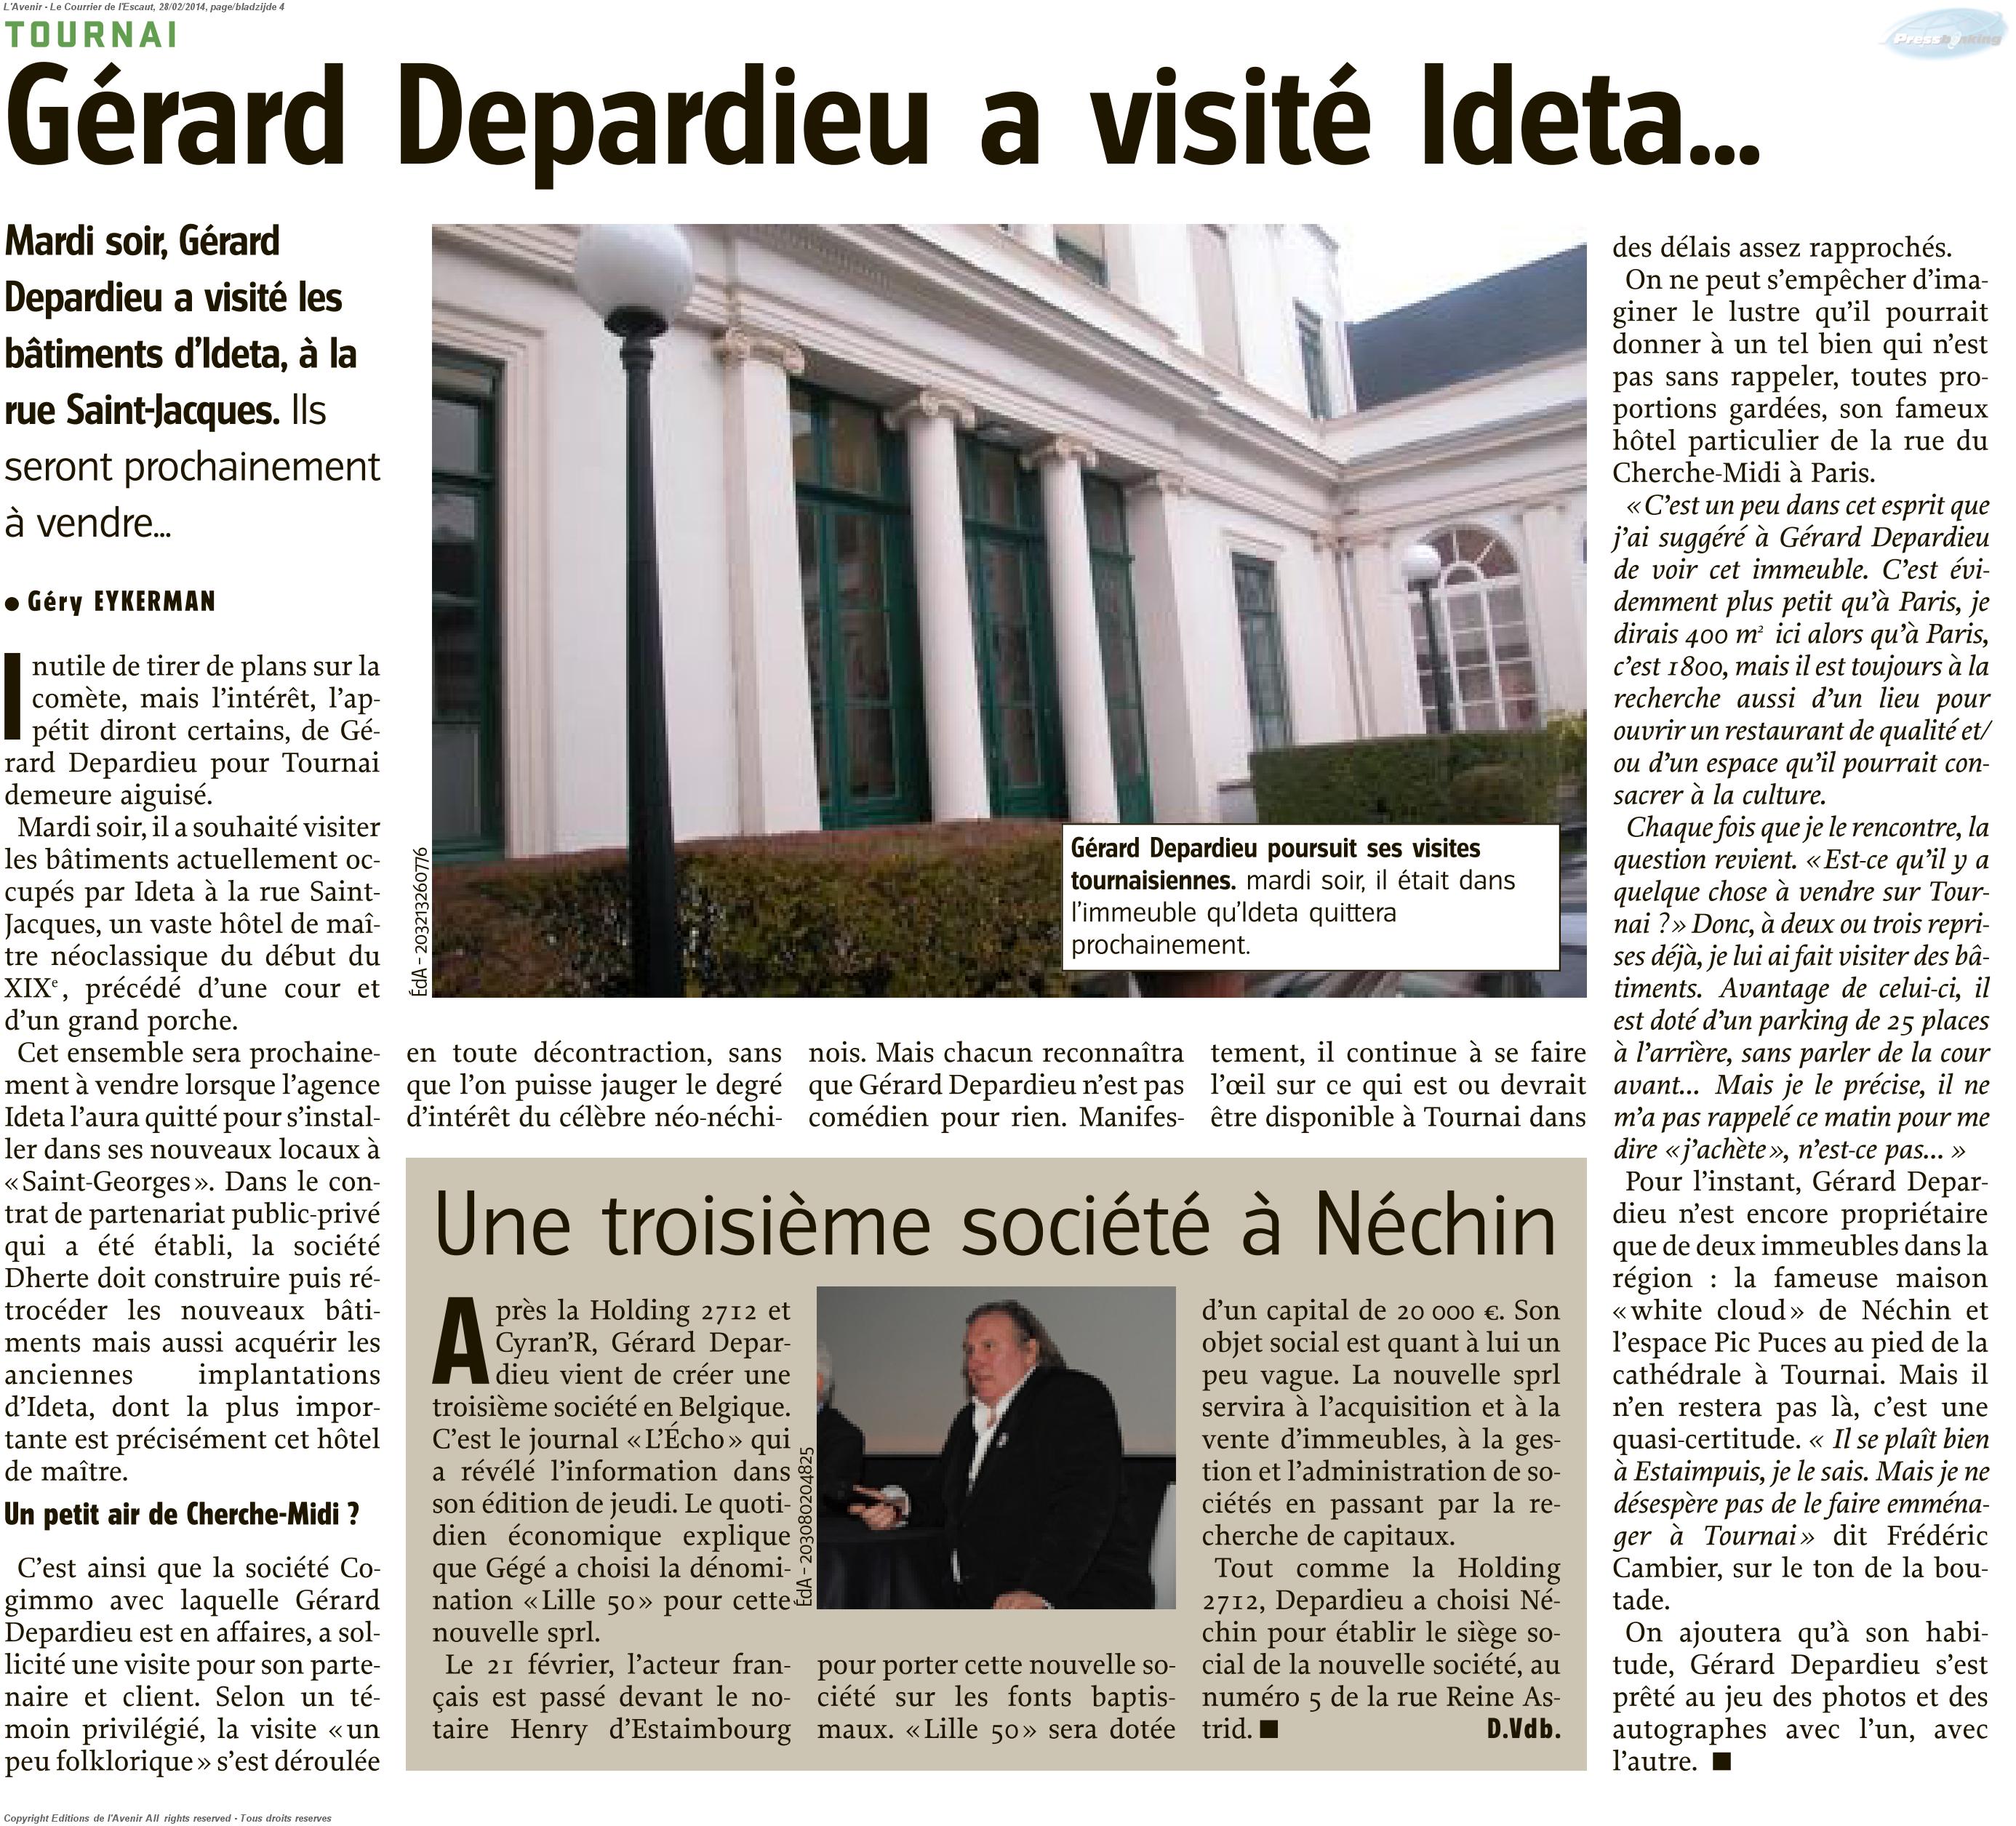 Gérard Depardieu a visité IDETA